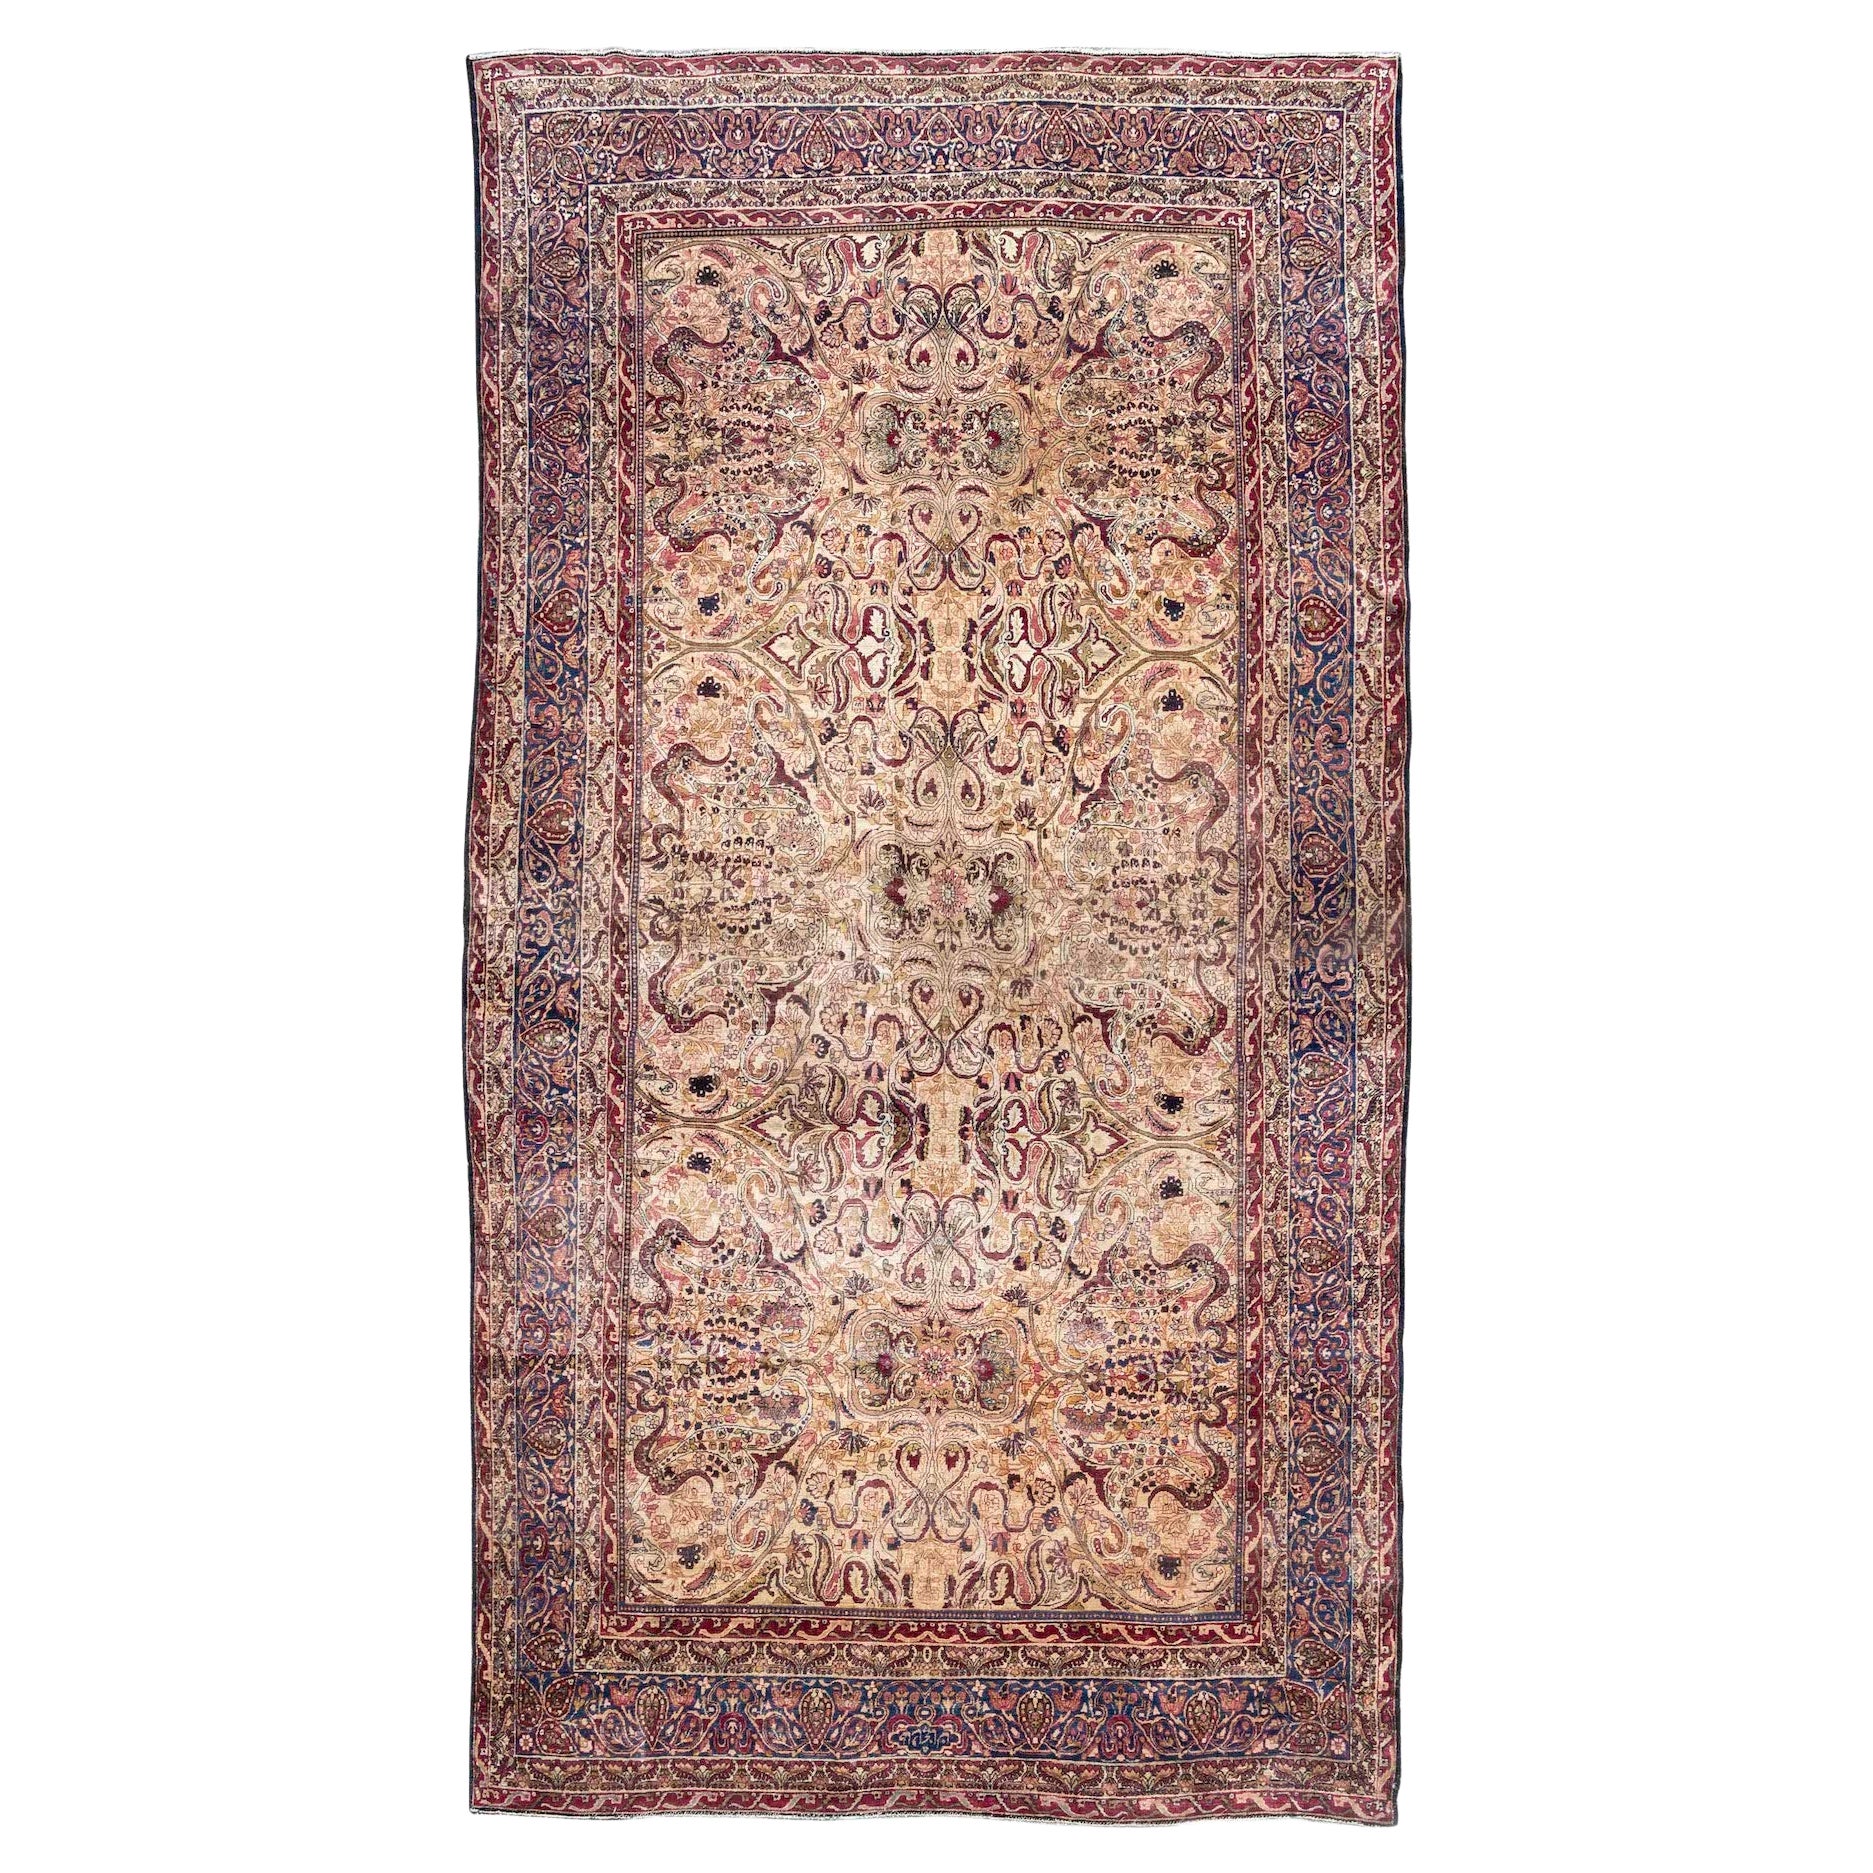 Antiker persischer Lavar Kirman-Teppich aus dem 19. Jahrhundert